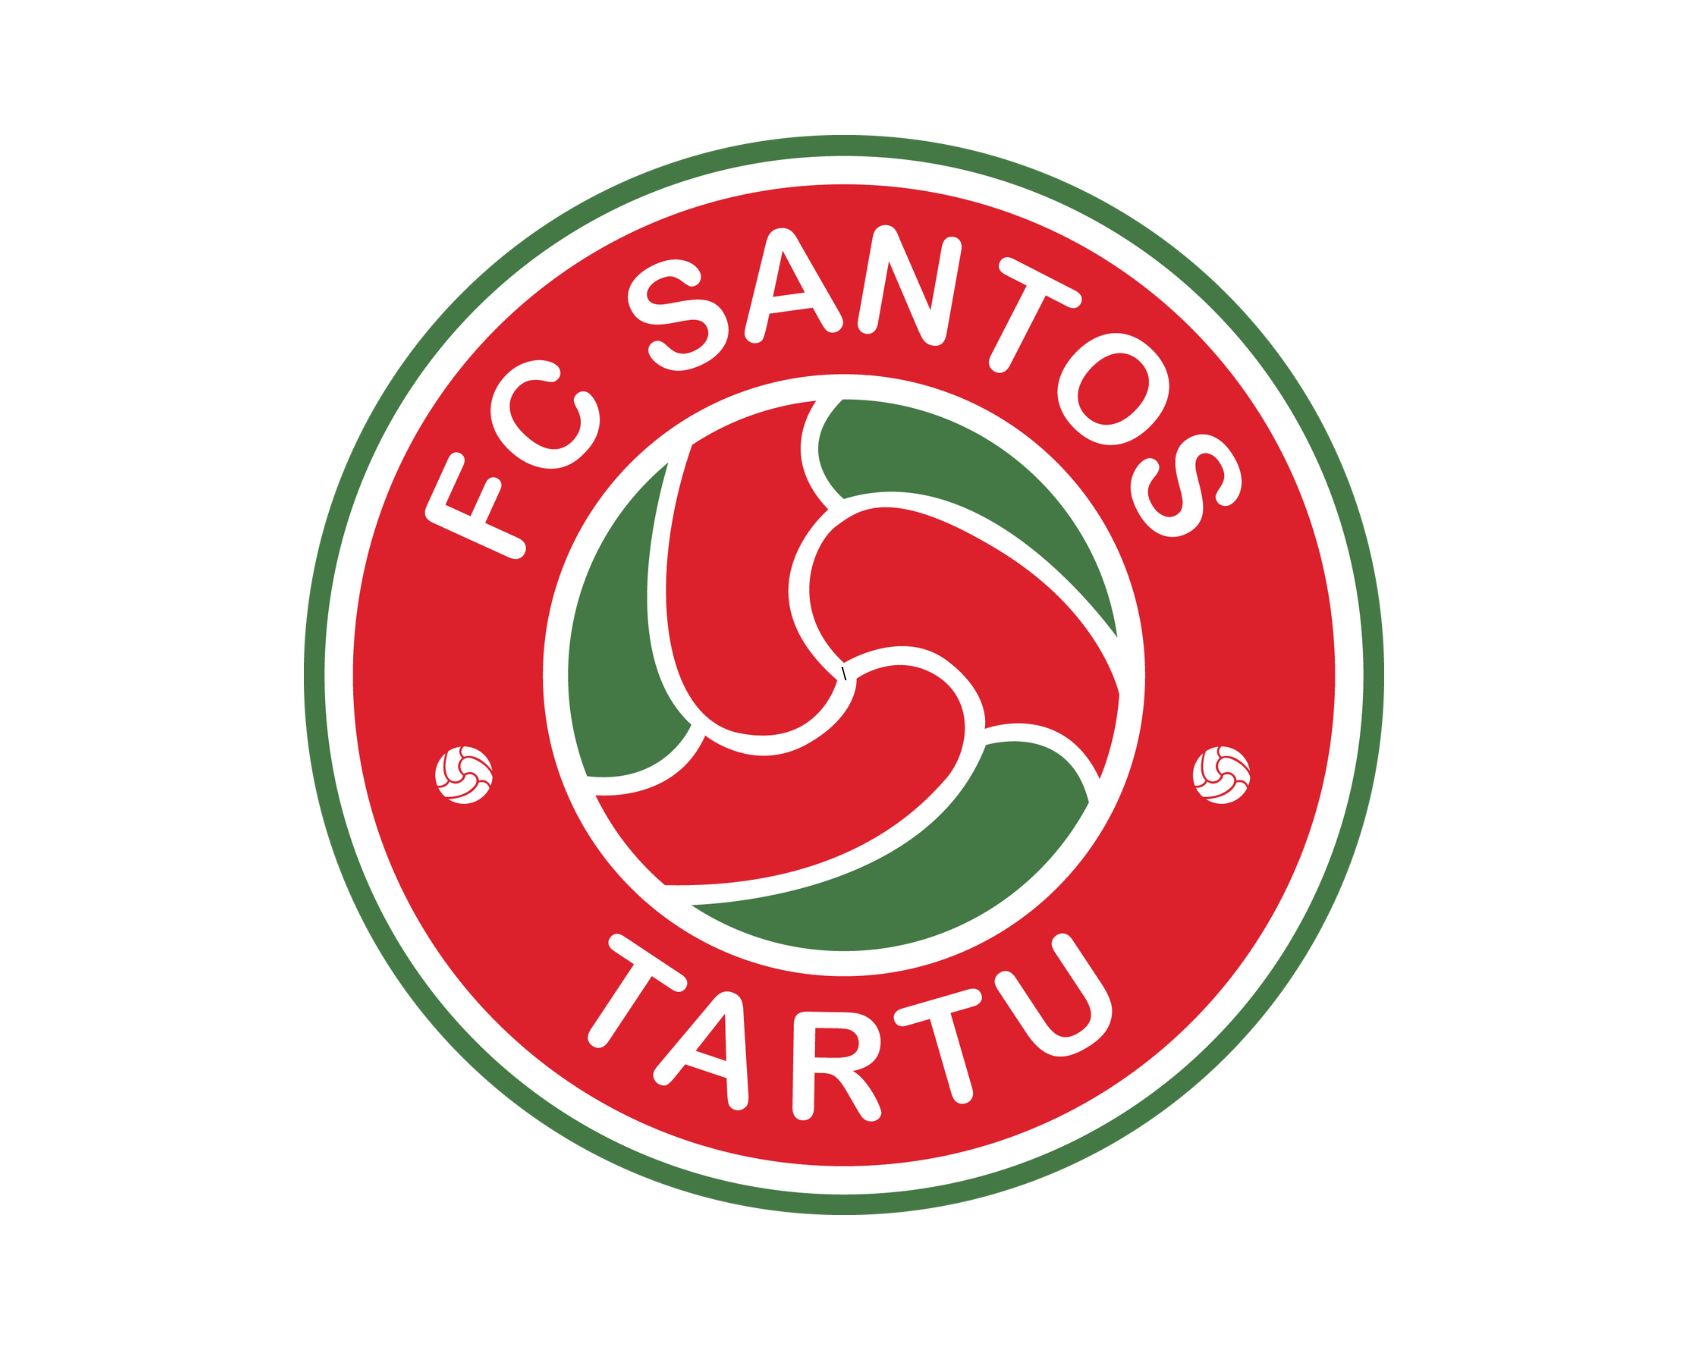 fc-santos-tartu-18-football-club-facts